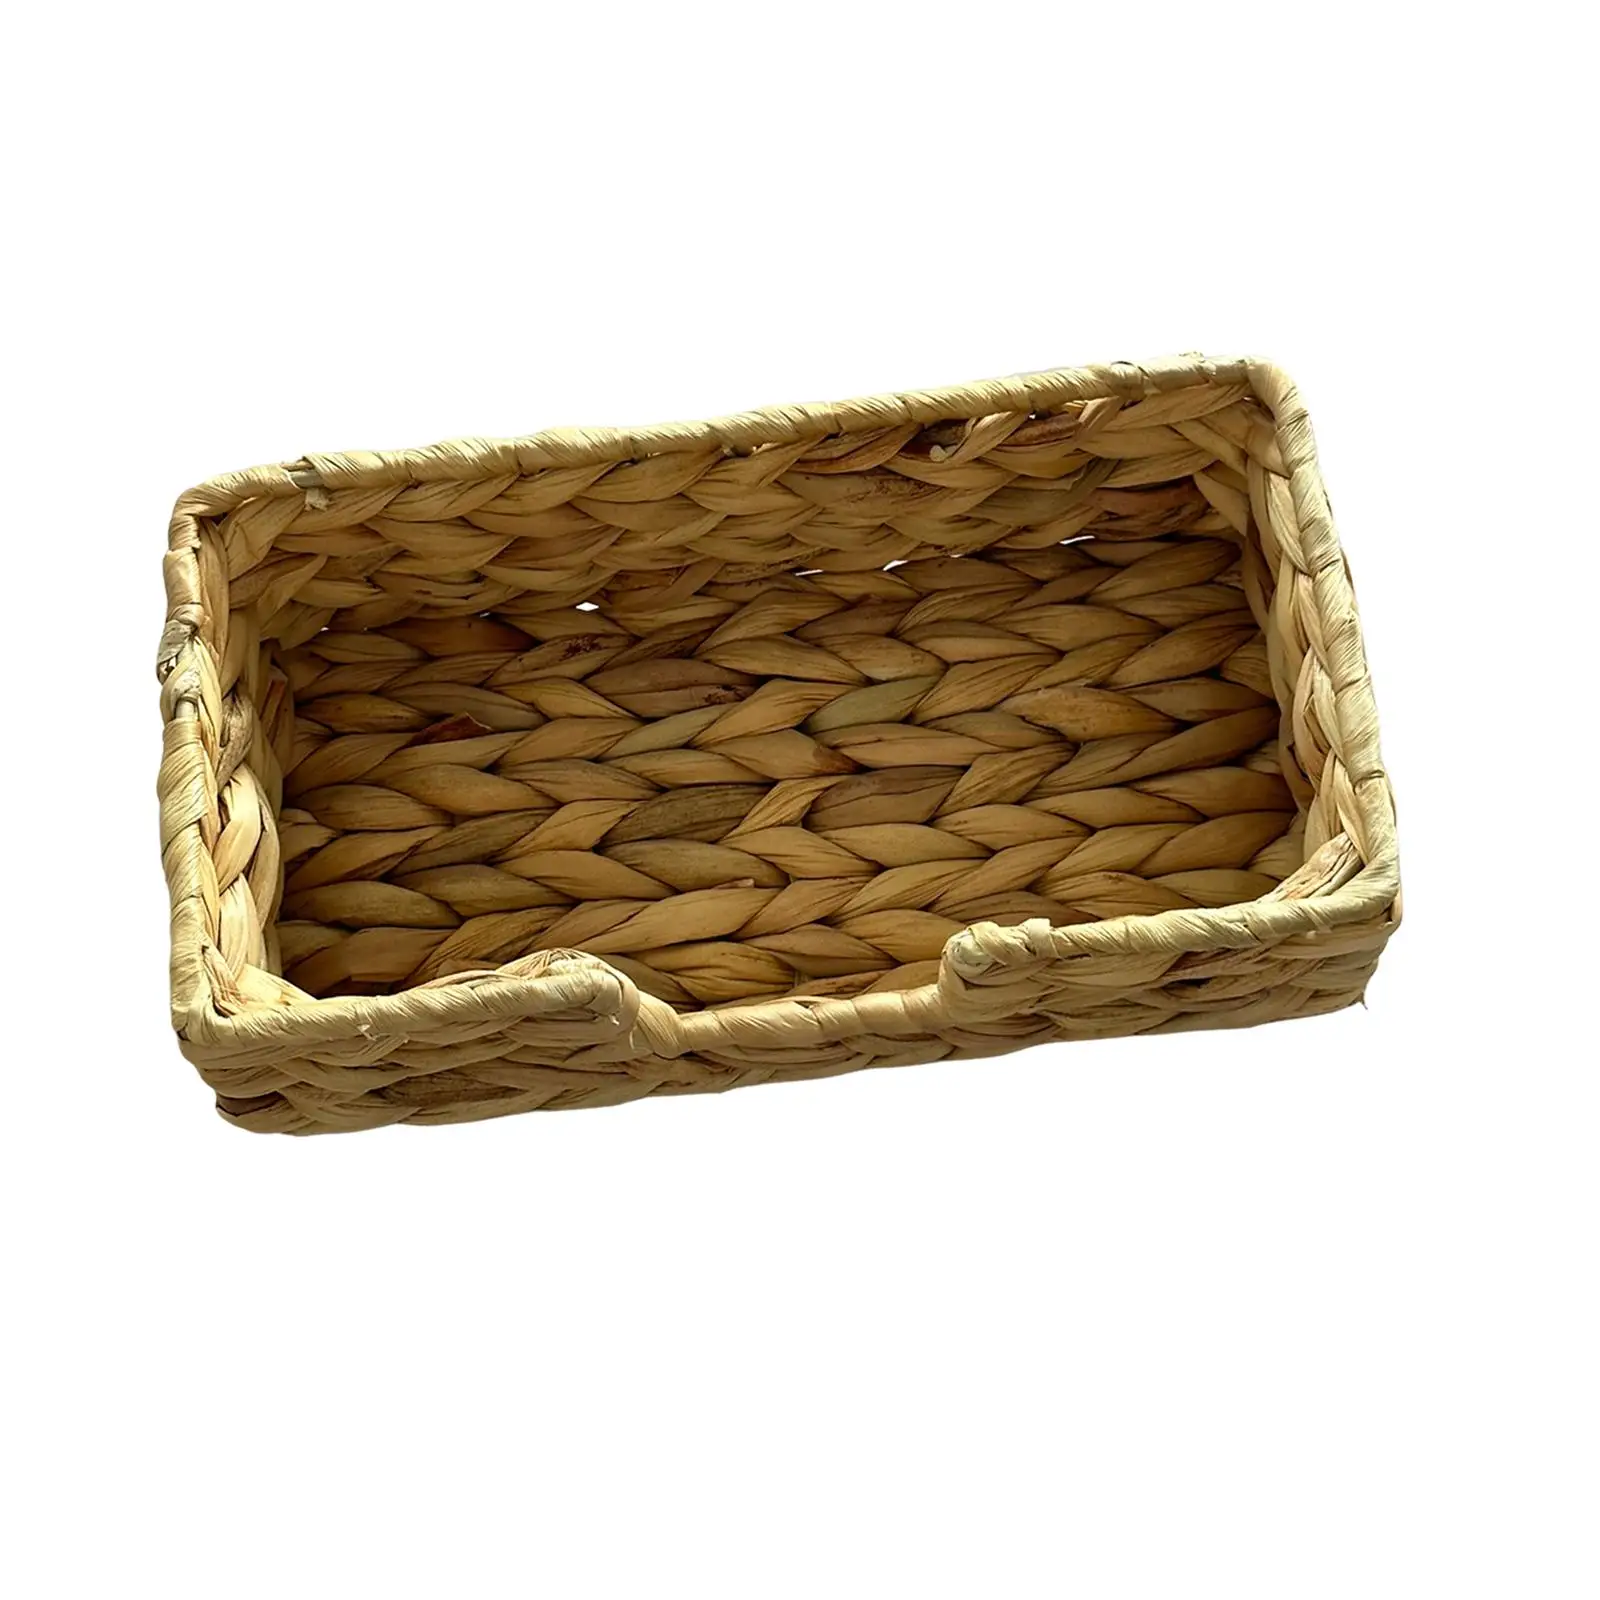 Woven Baskets Napkin Holder Storage Bin for Desk Countertop Home Decor